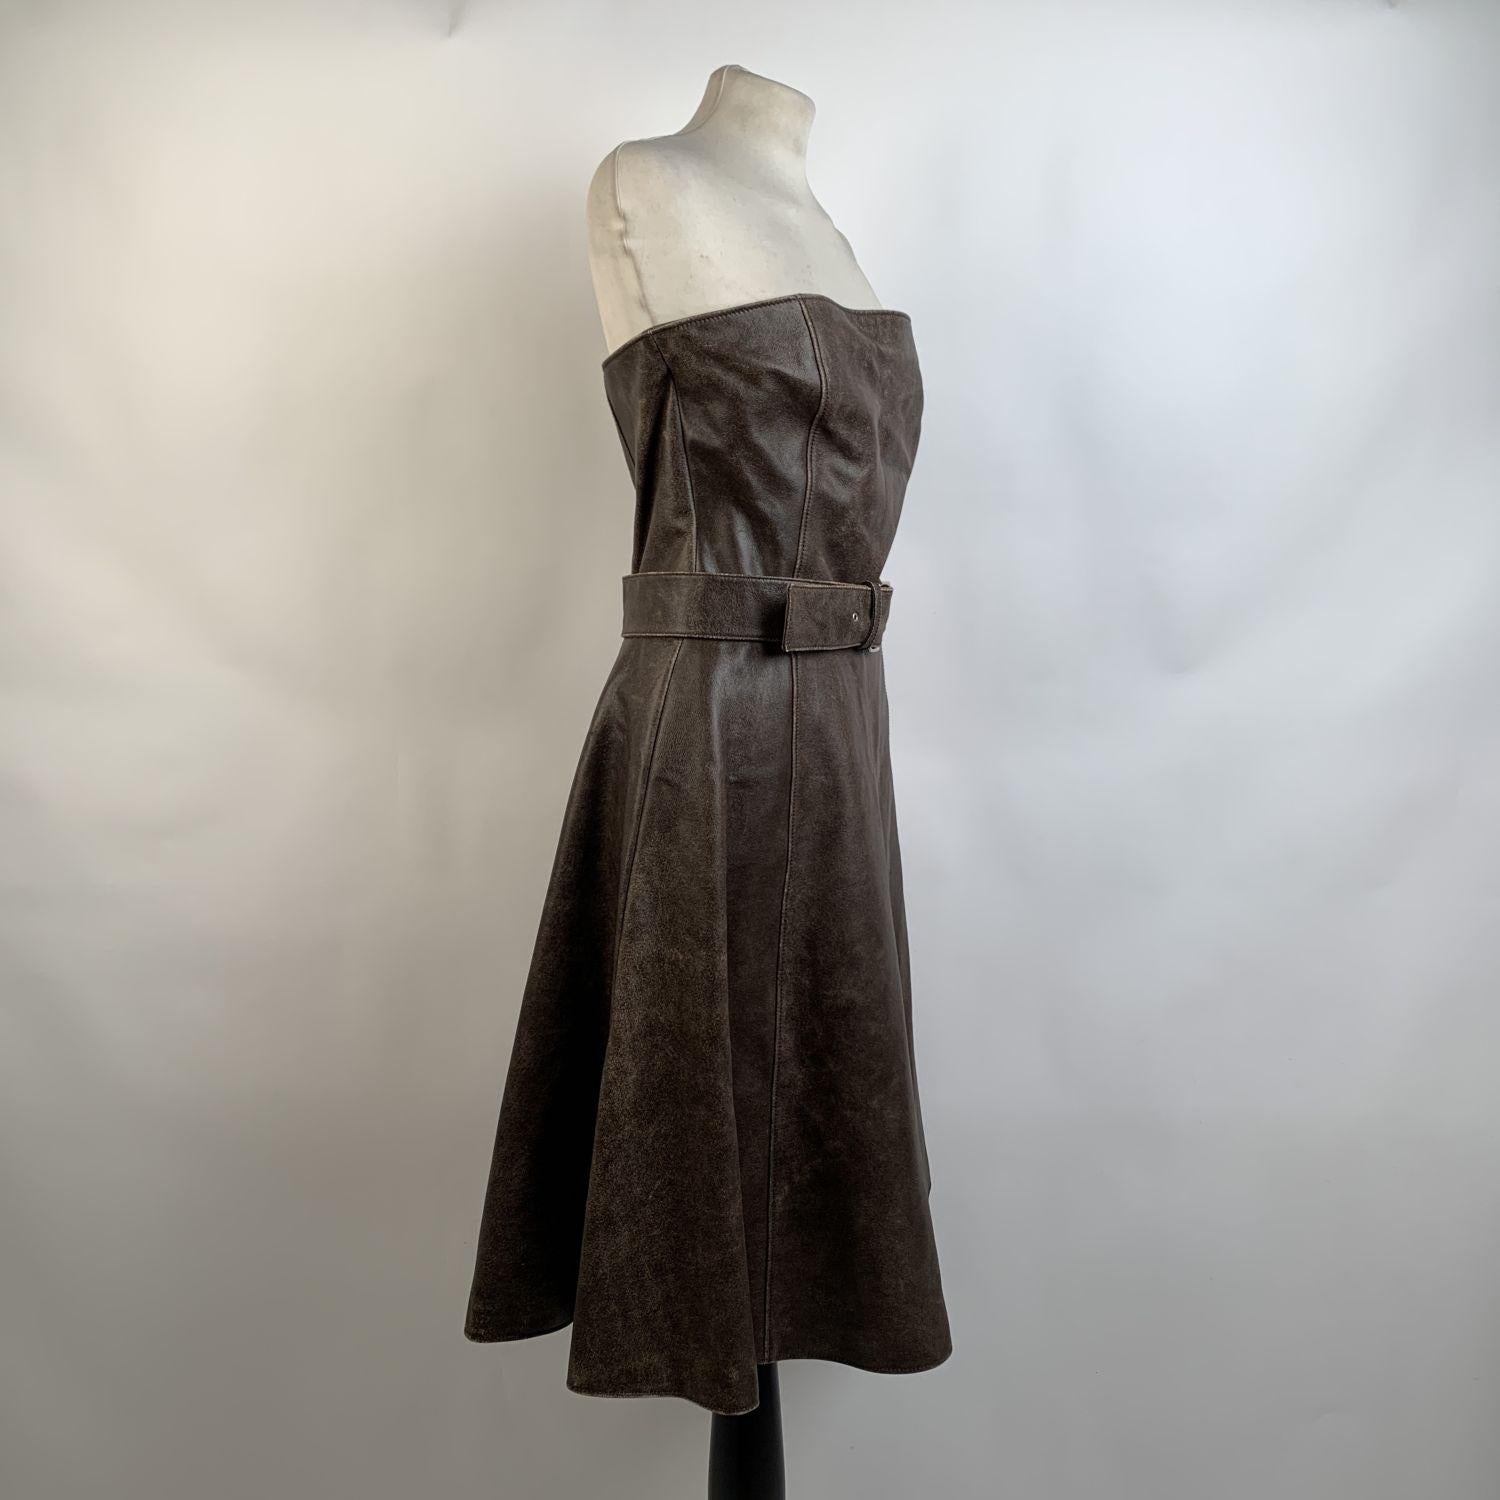 Women's Miu Miu Brown Distressed Leather Bustier Dress Size 44